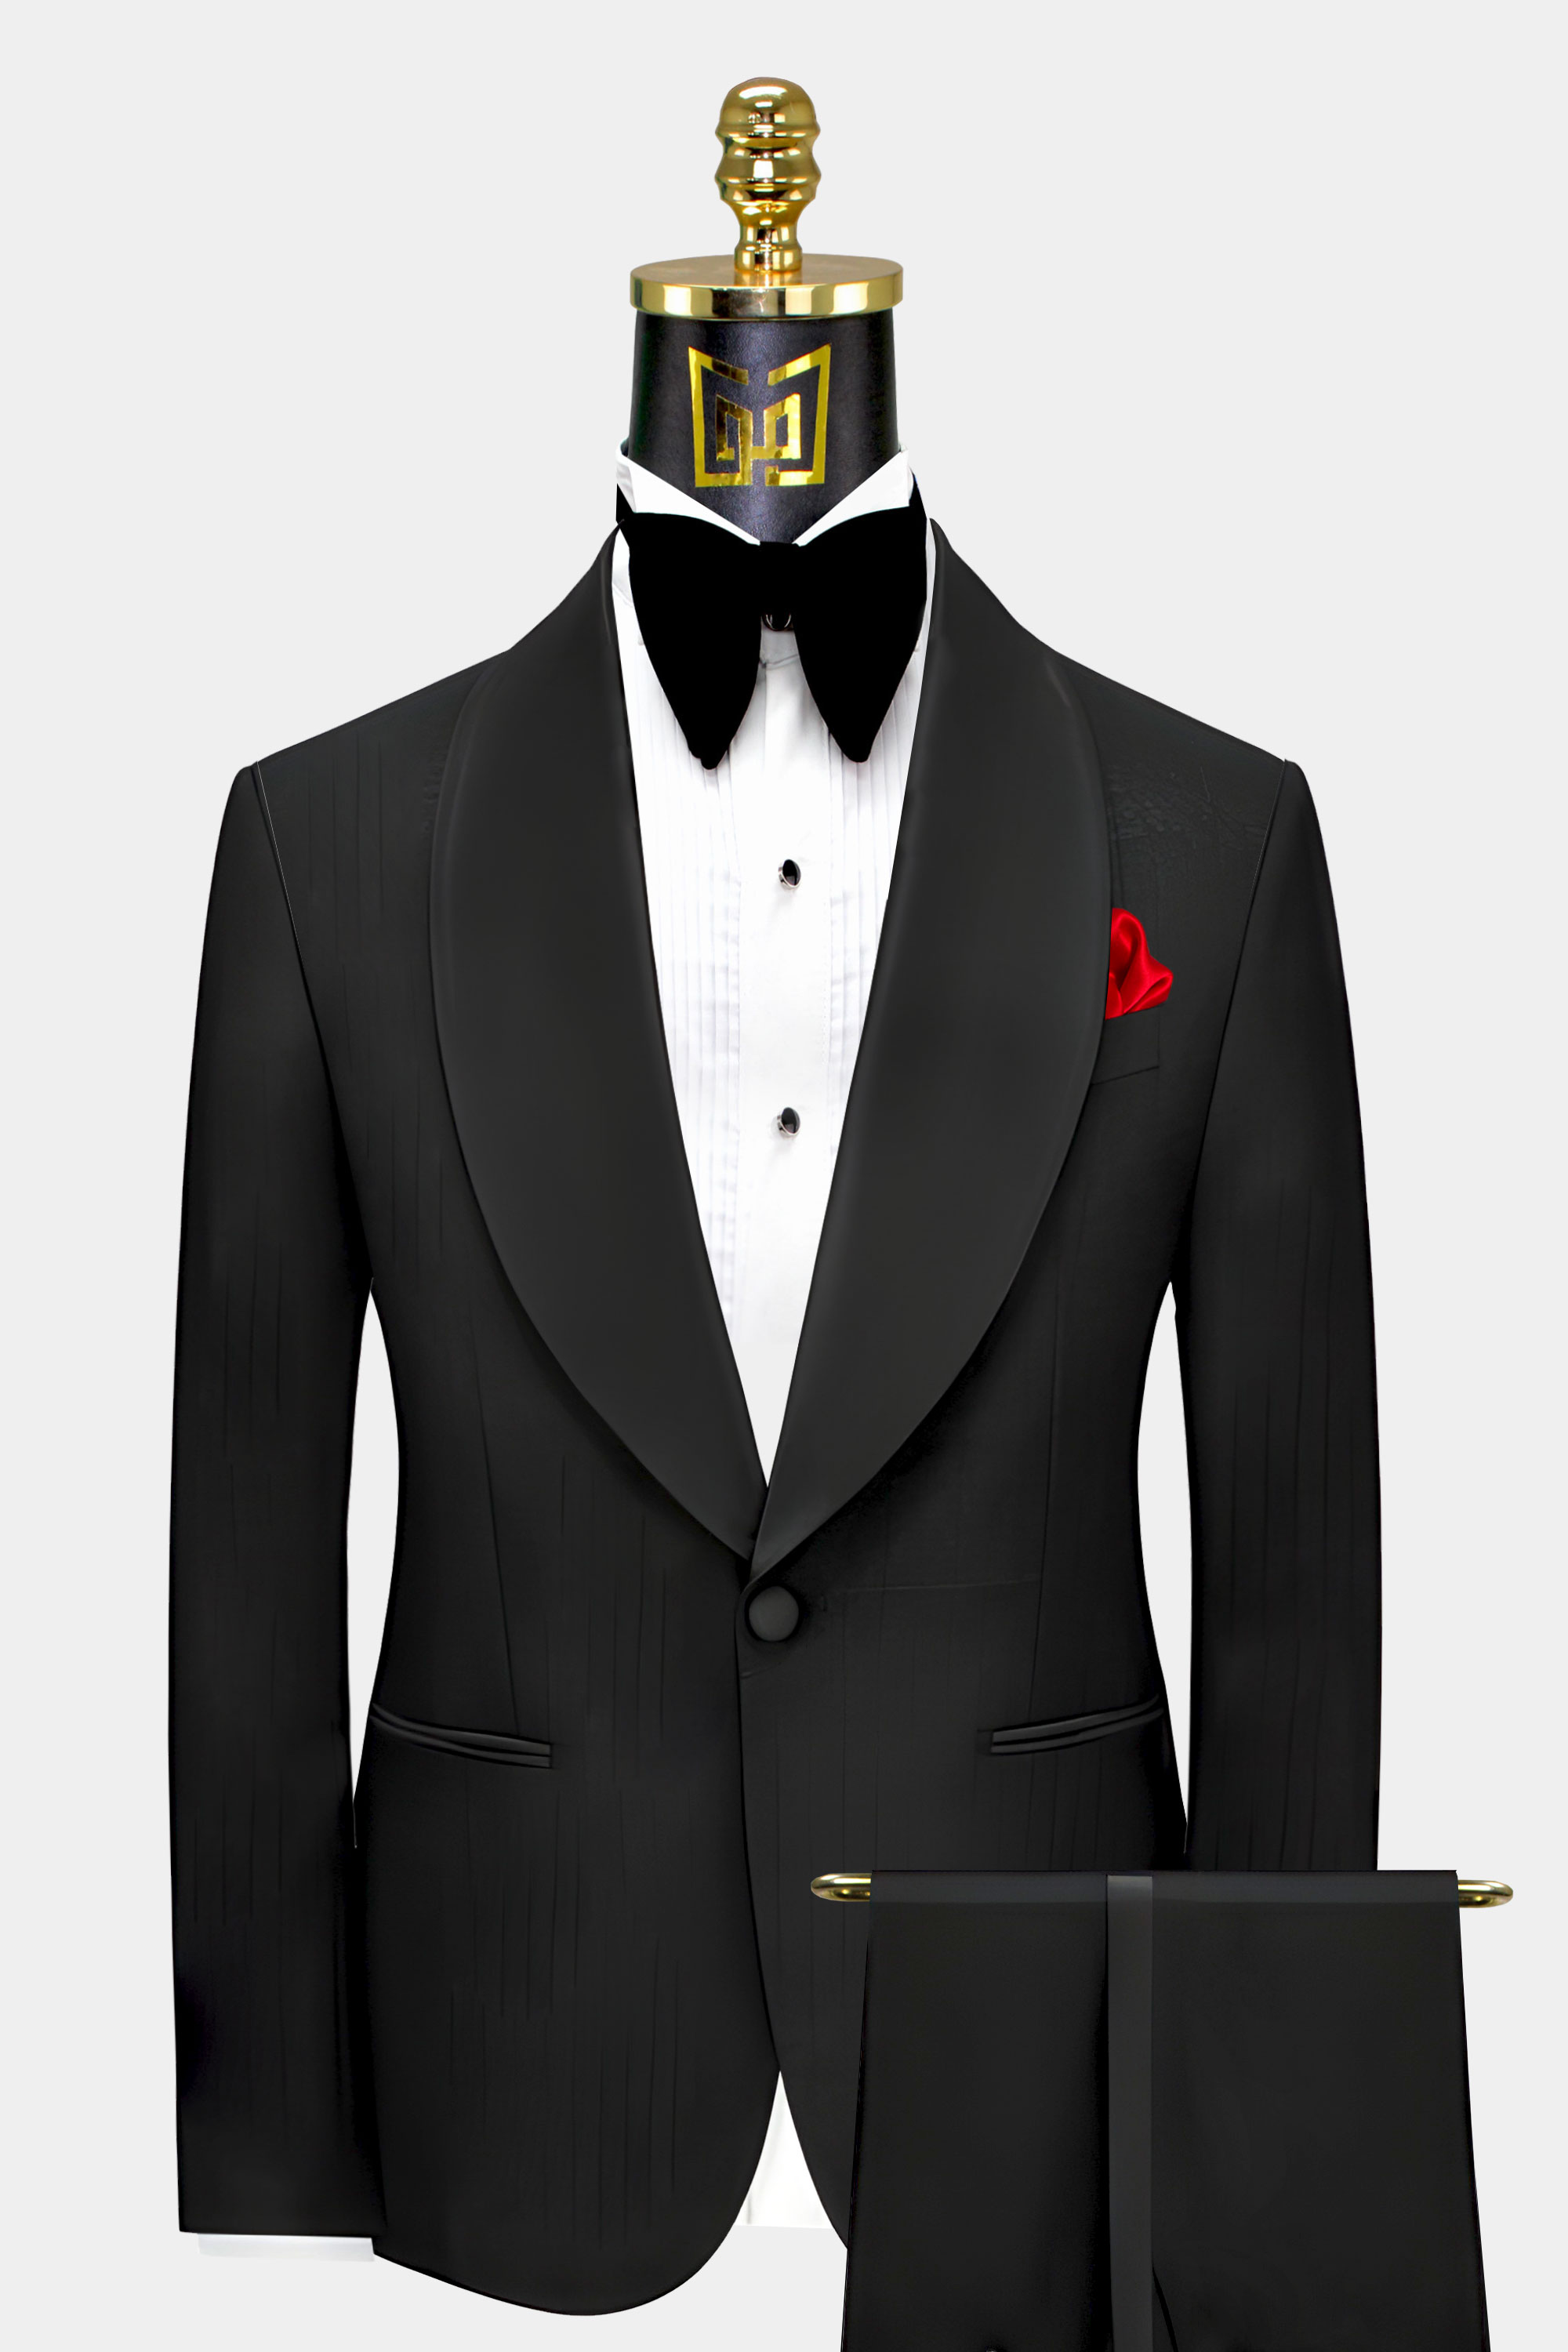 The Black Wedding Suit